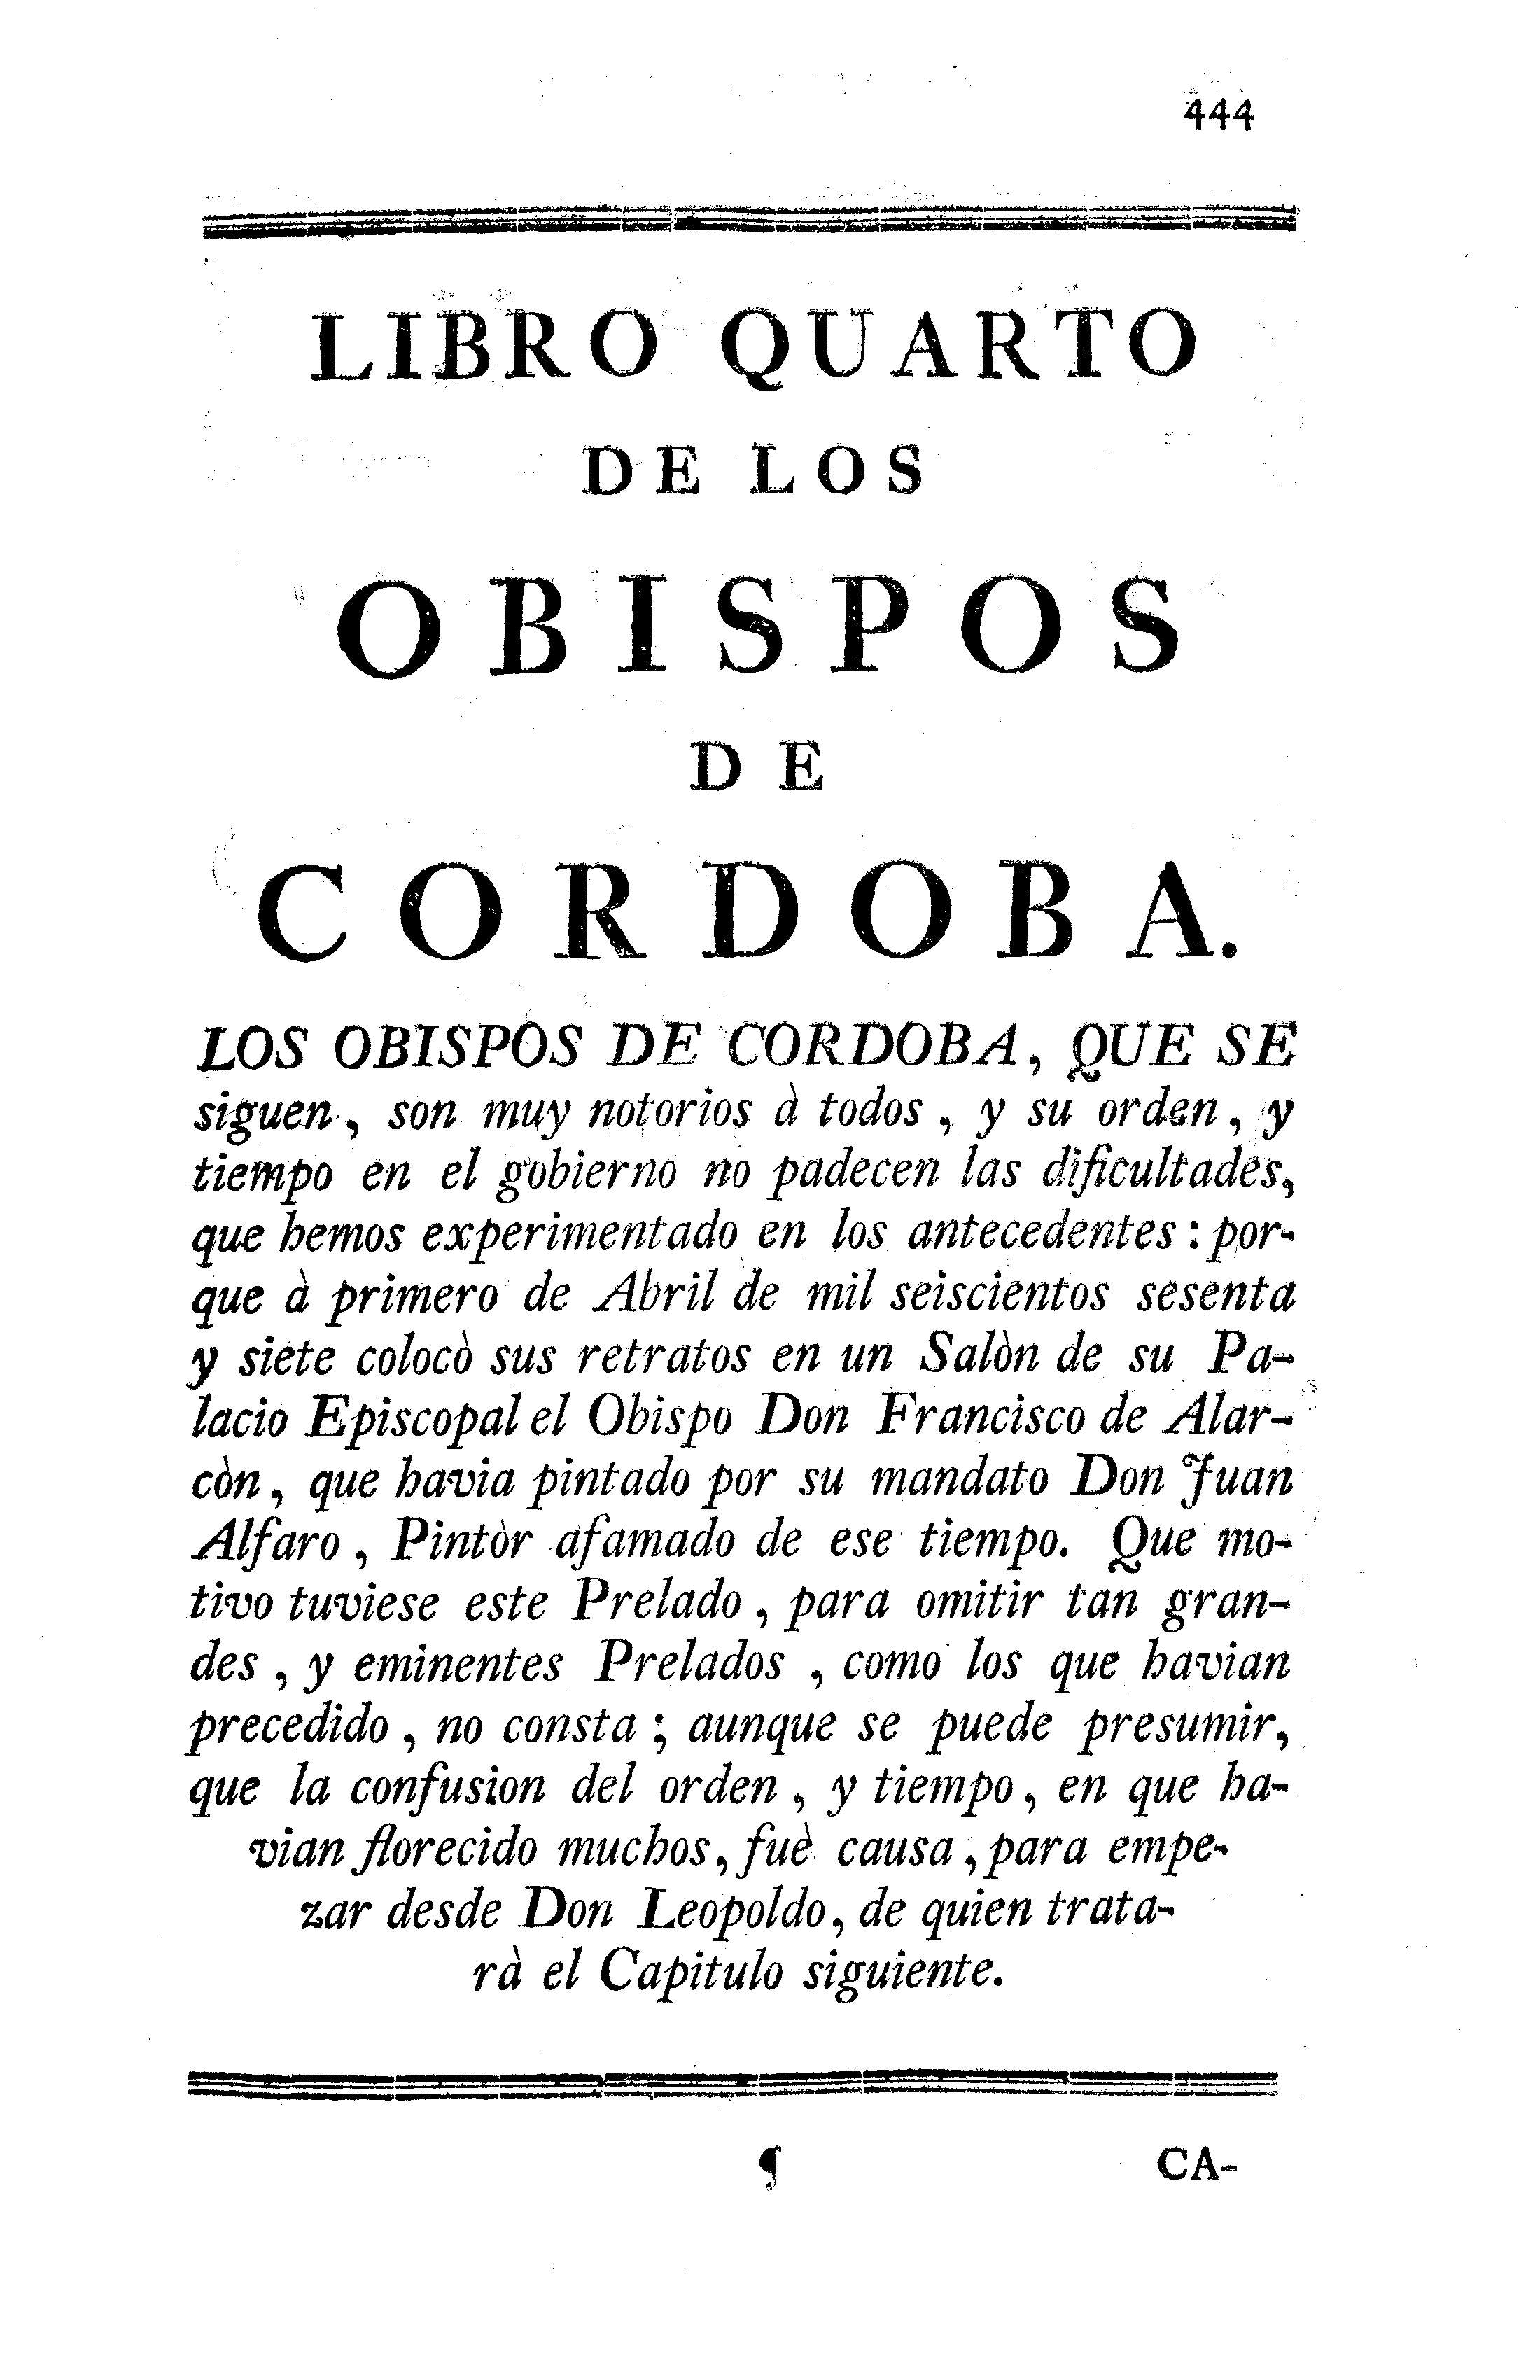 Libro quarto de los obispos de Cordoba